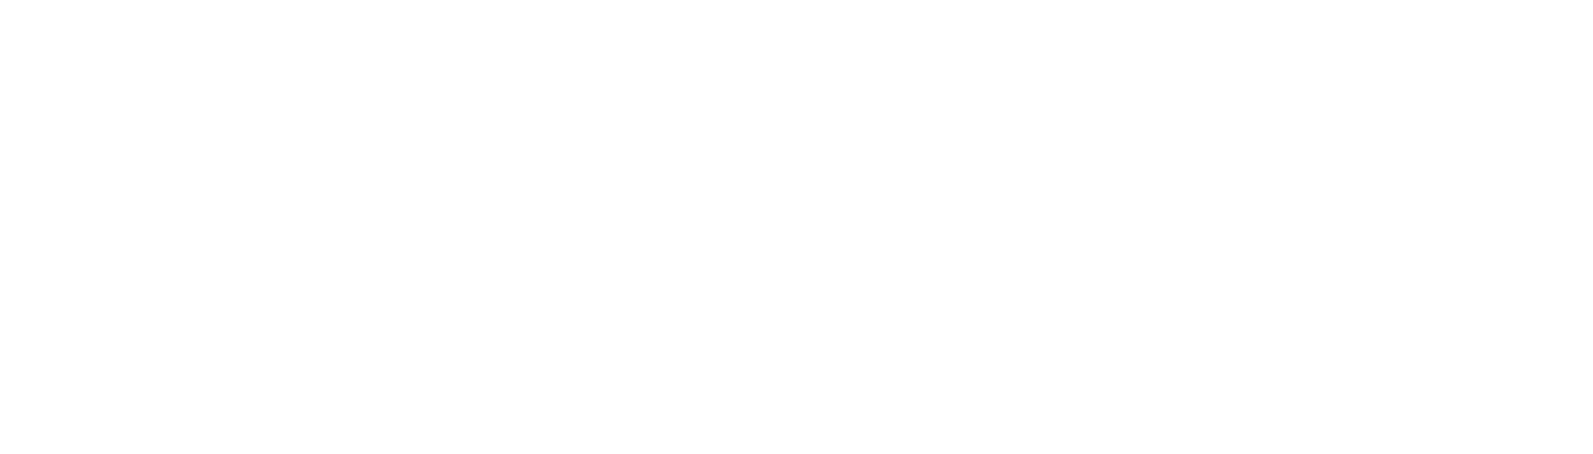 microsoft-logo-white